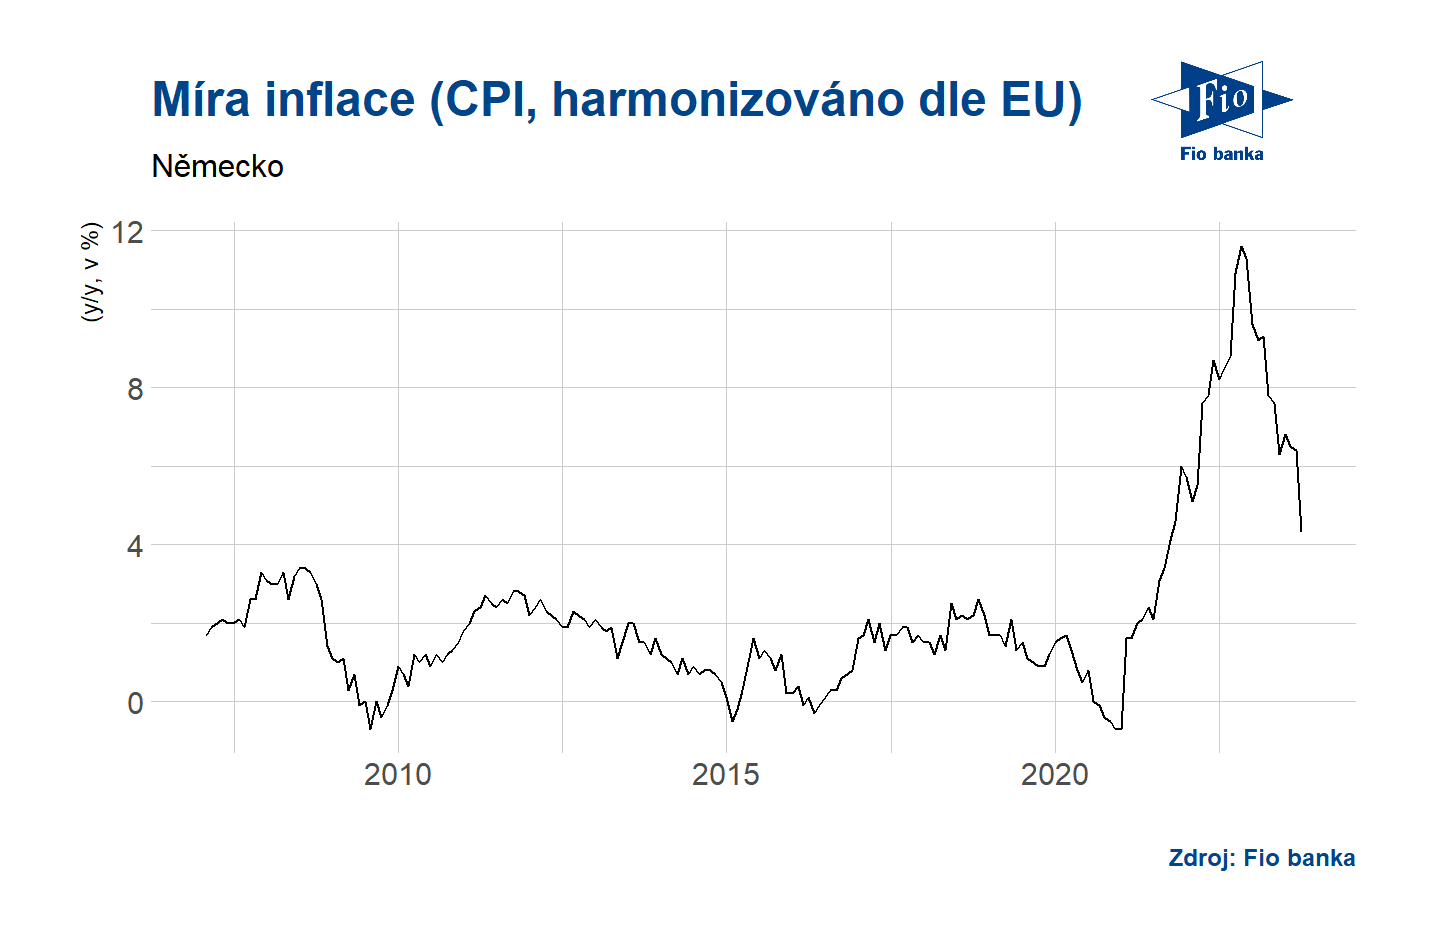 Vývoj harmonizovaného indexu CPI v Německu